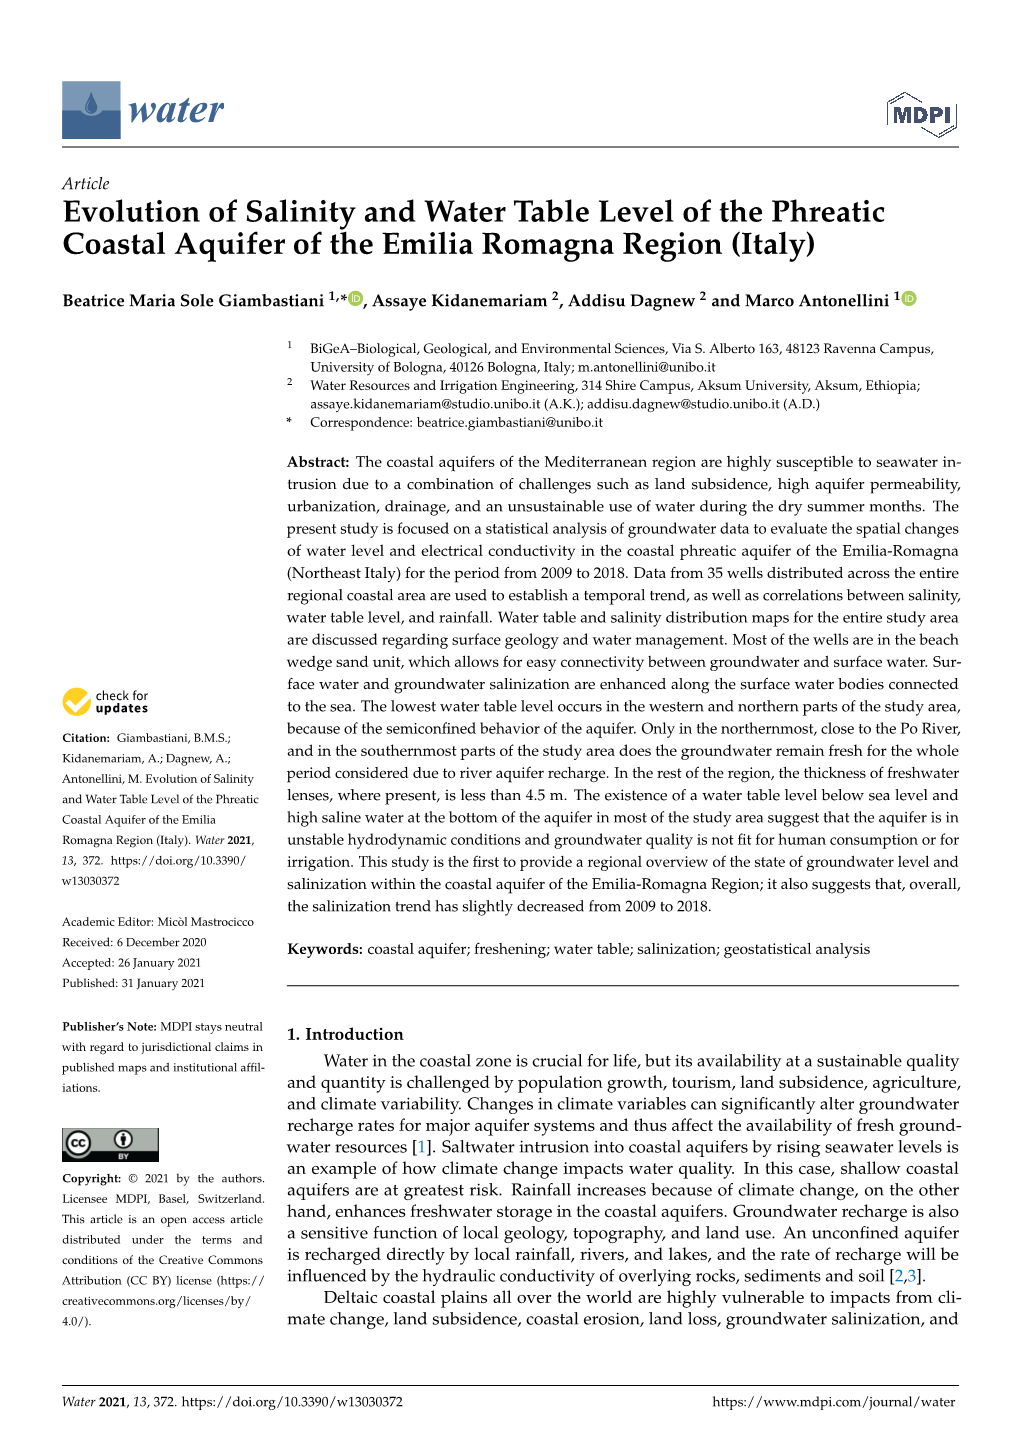 Evolution of Salinity and Water Table Level of the Phreatic Coastal Aquifer of the Emilia Romagna Region (Italy)